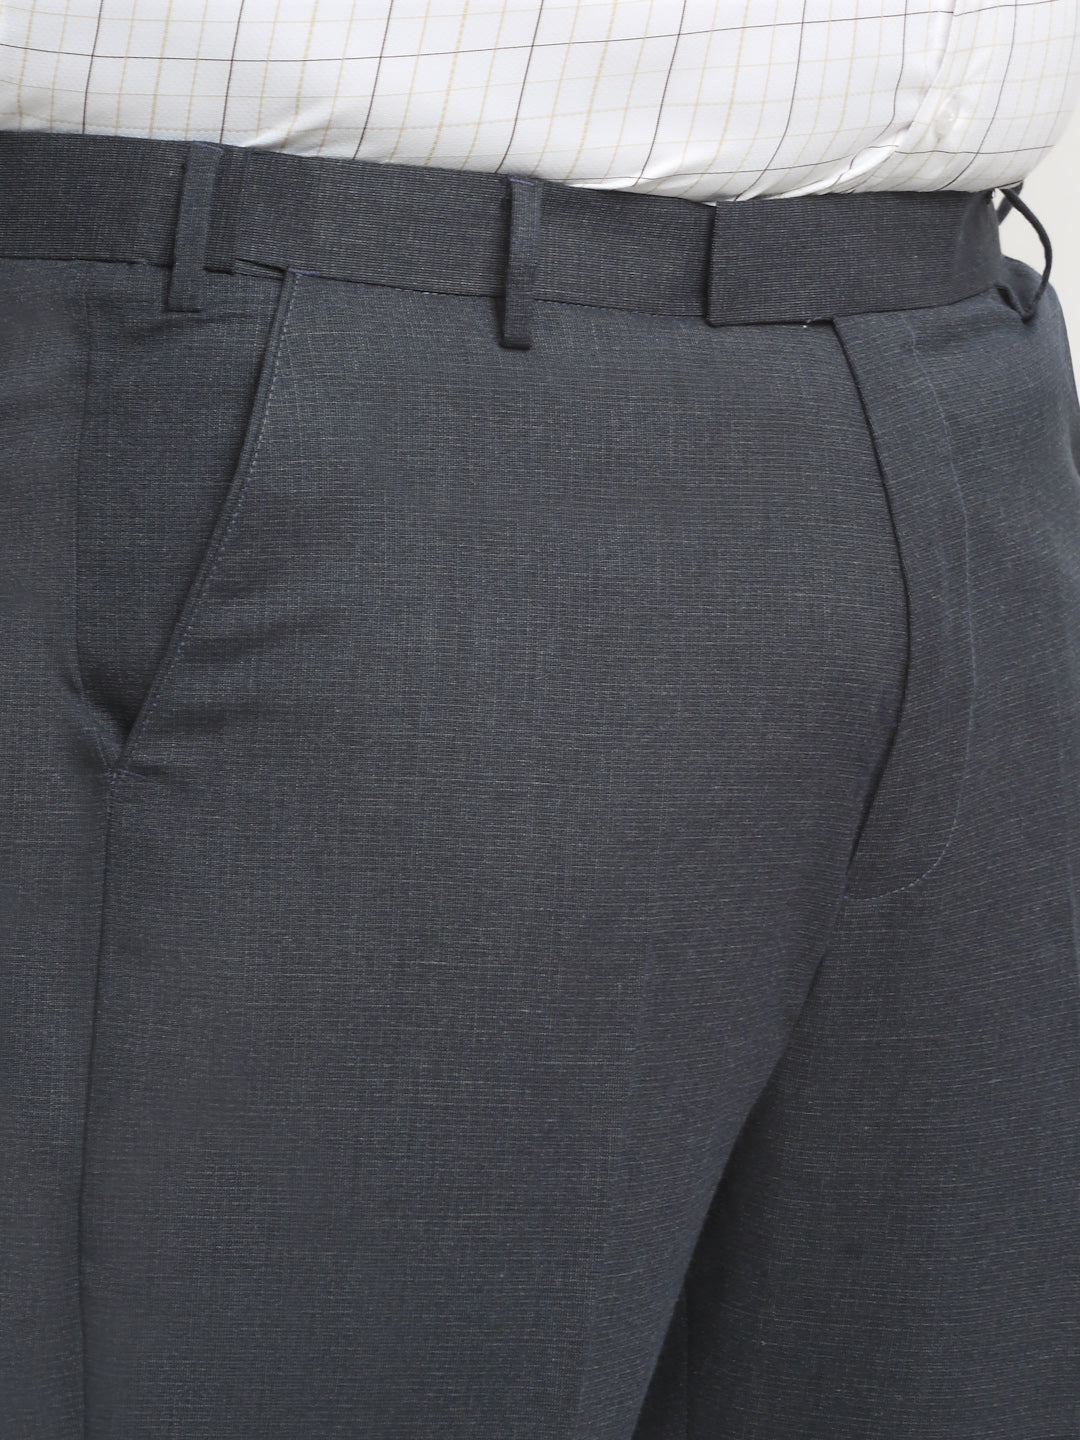 Ex-BHS Boys Charcoal Black Grey Regular Fit School Trousers Age 3-16  Adjustable | eBay